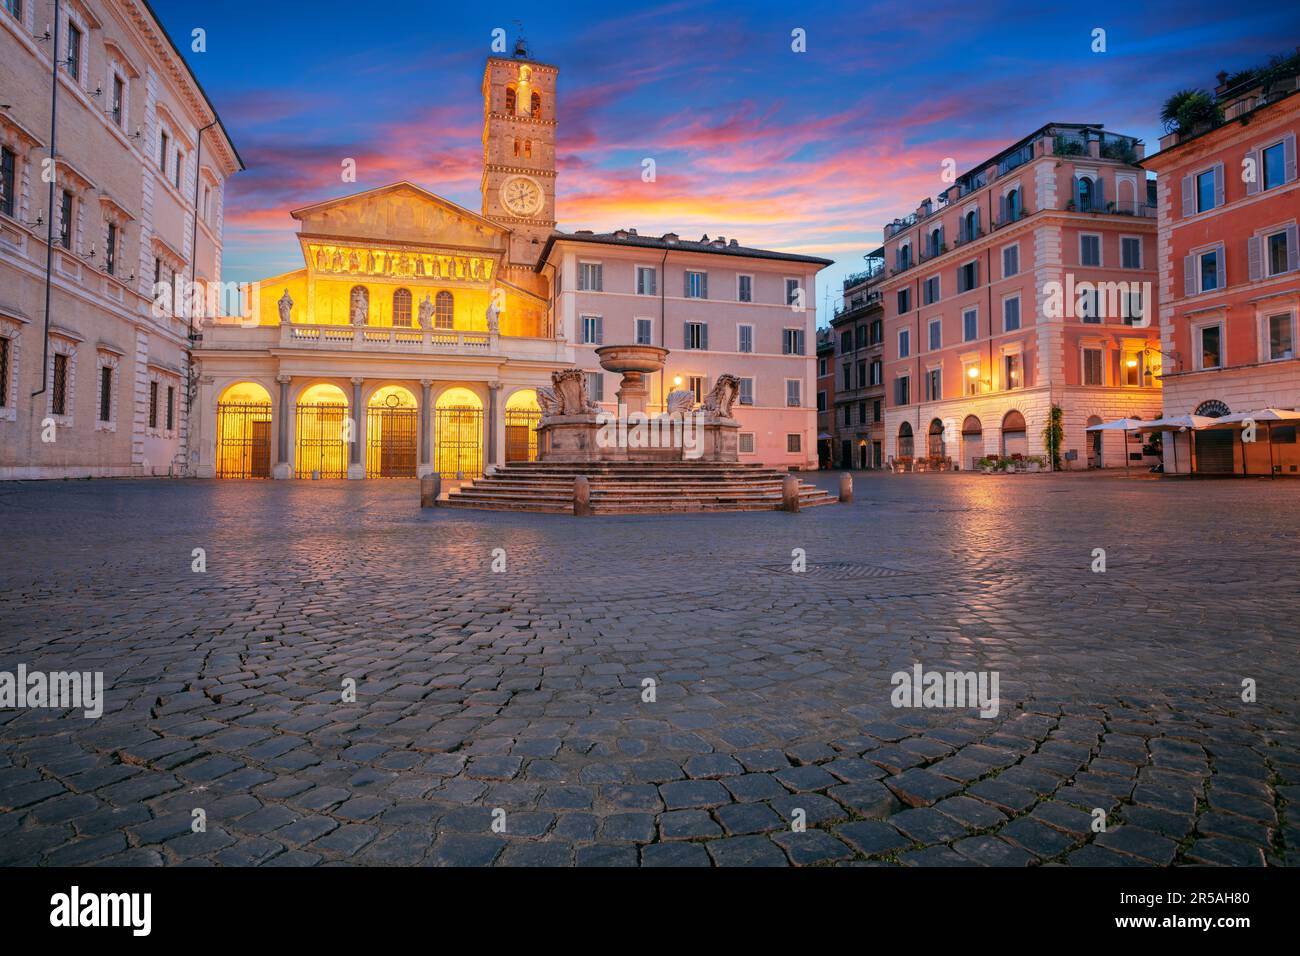 Rom, Italien. Stadtbild von Rom, Italien mit Piazza Santa Maria in Trastevere bei Sonnenuntergang. Stockfoto